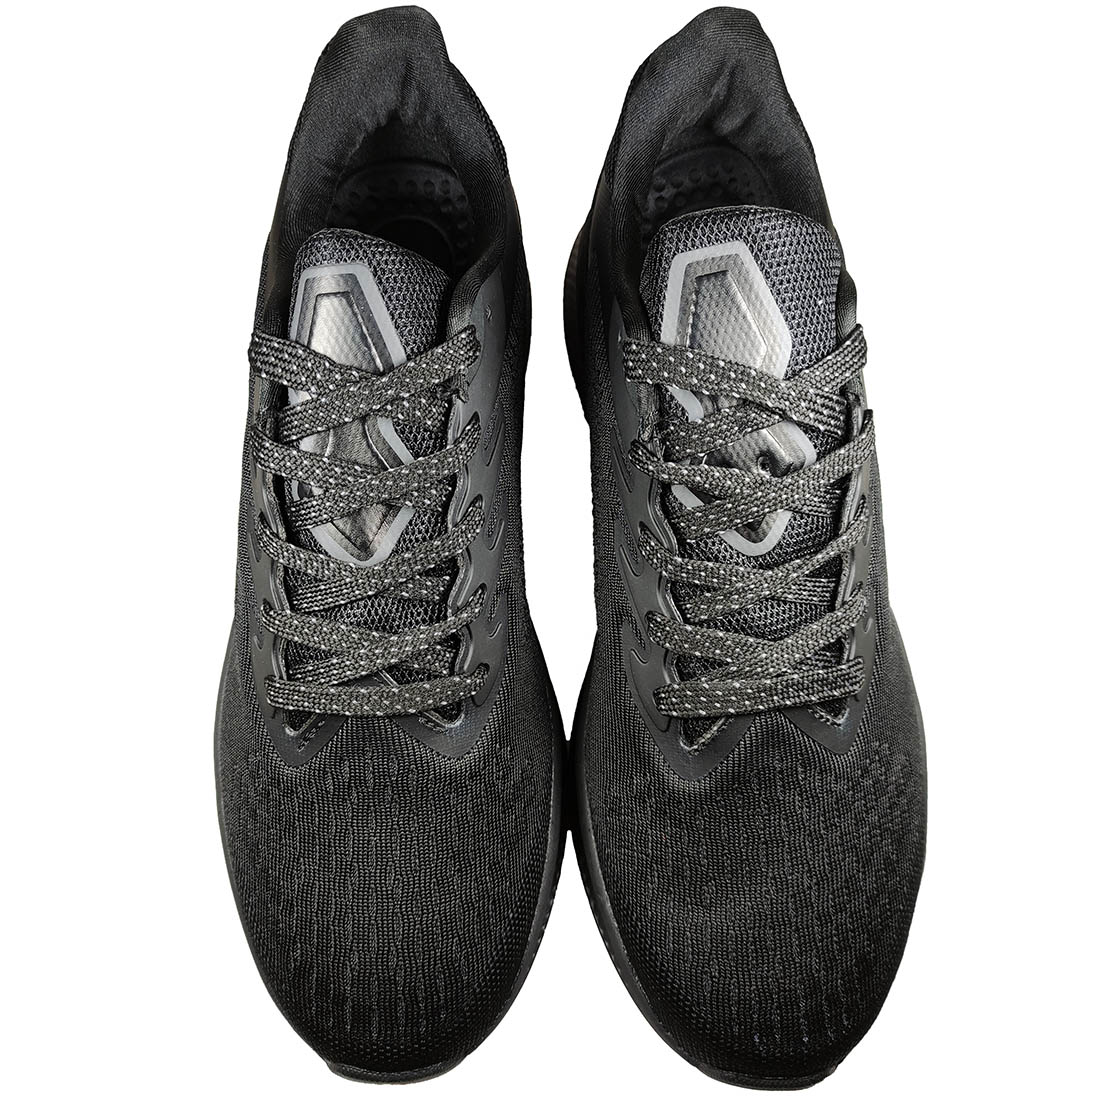 Mens Sport Shoes Atlanta M2209 Black